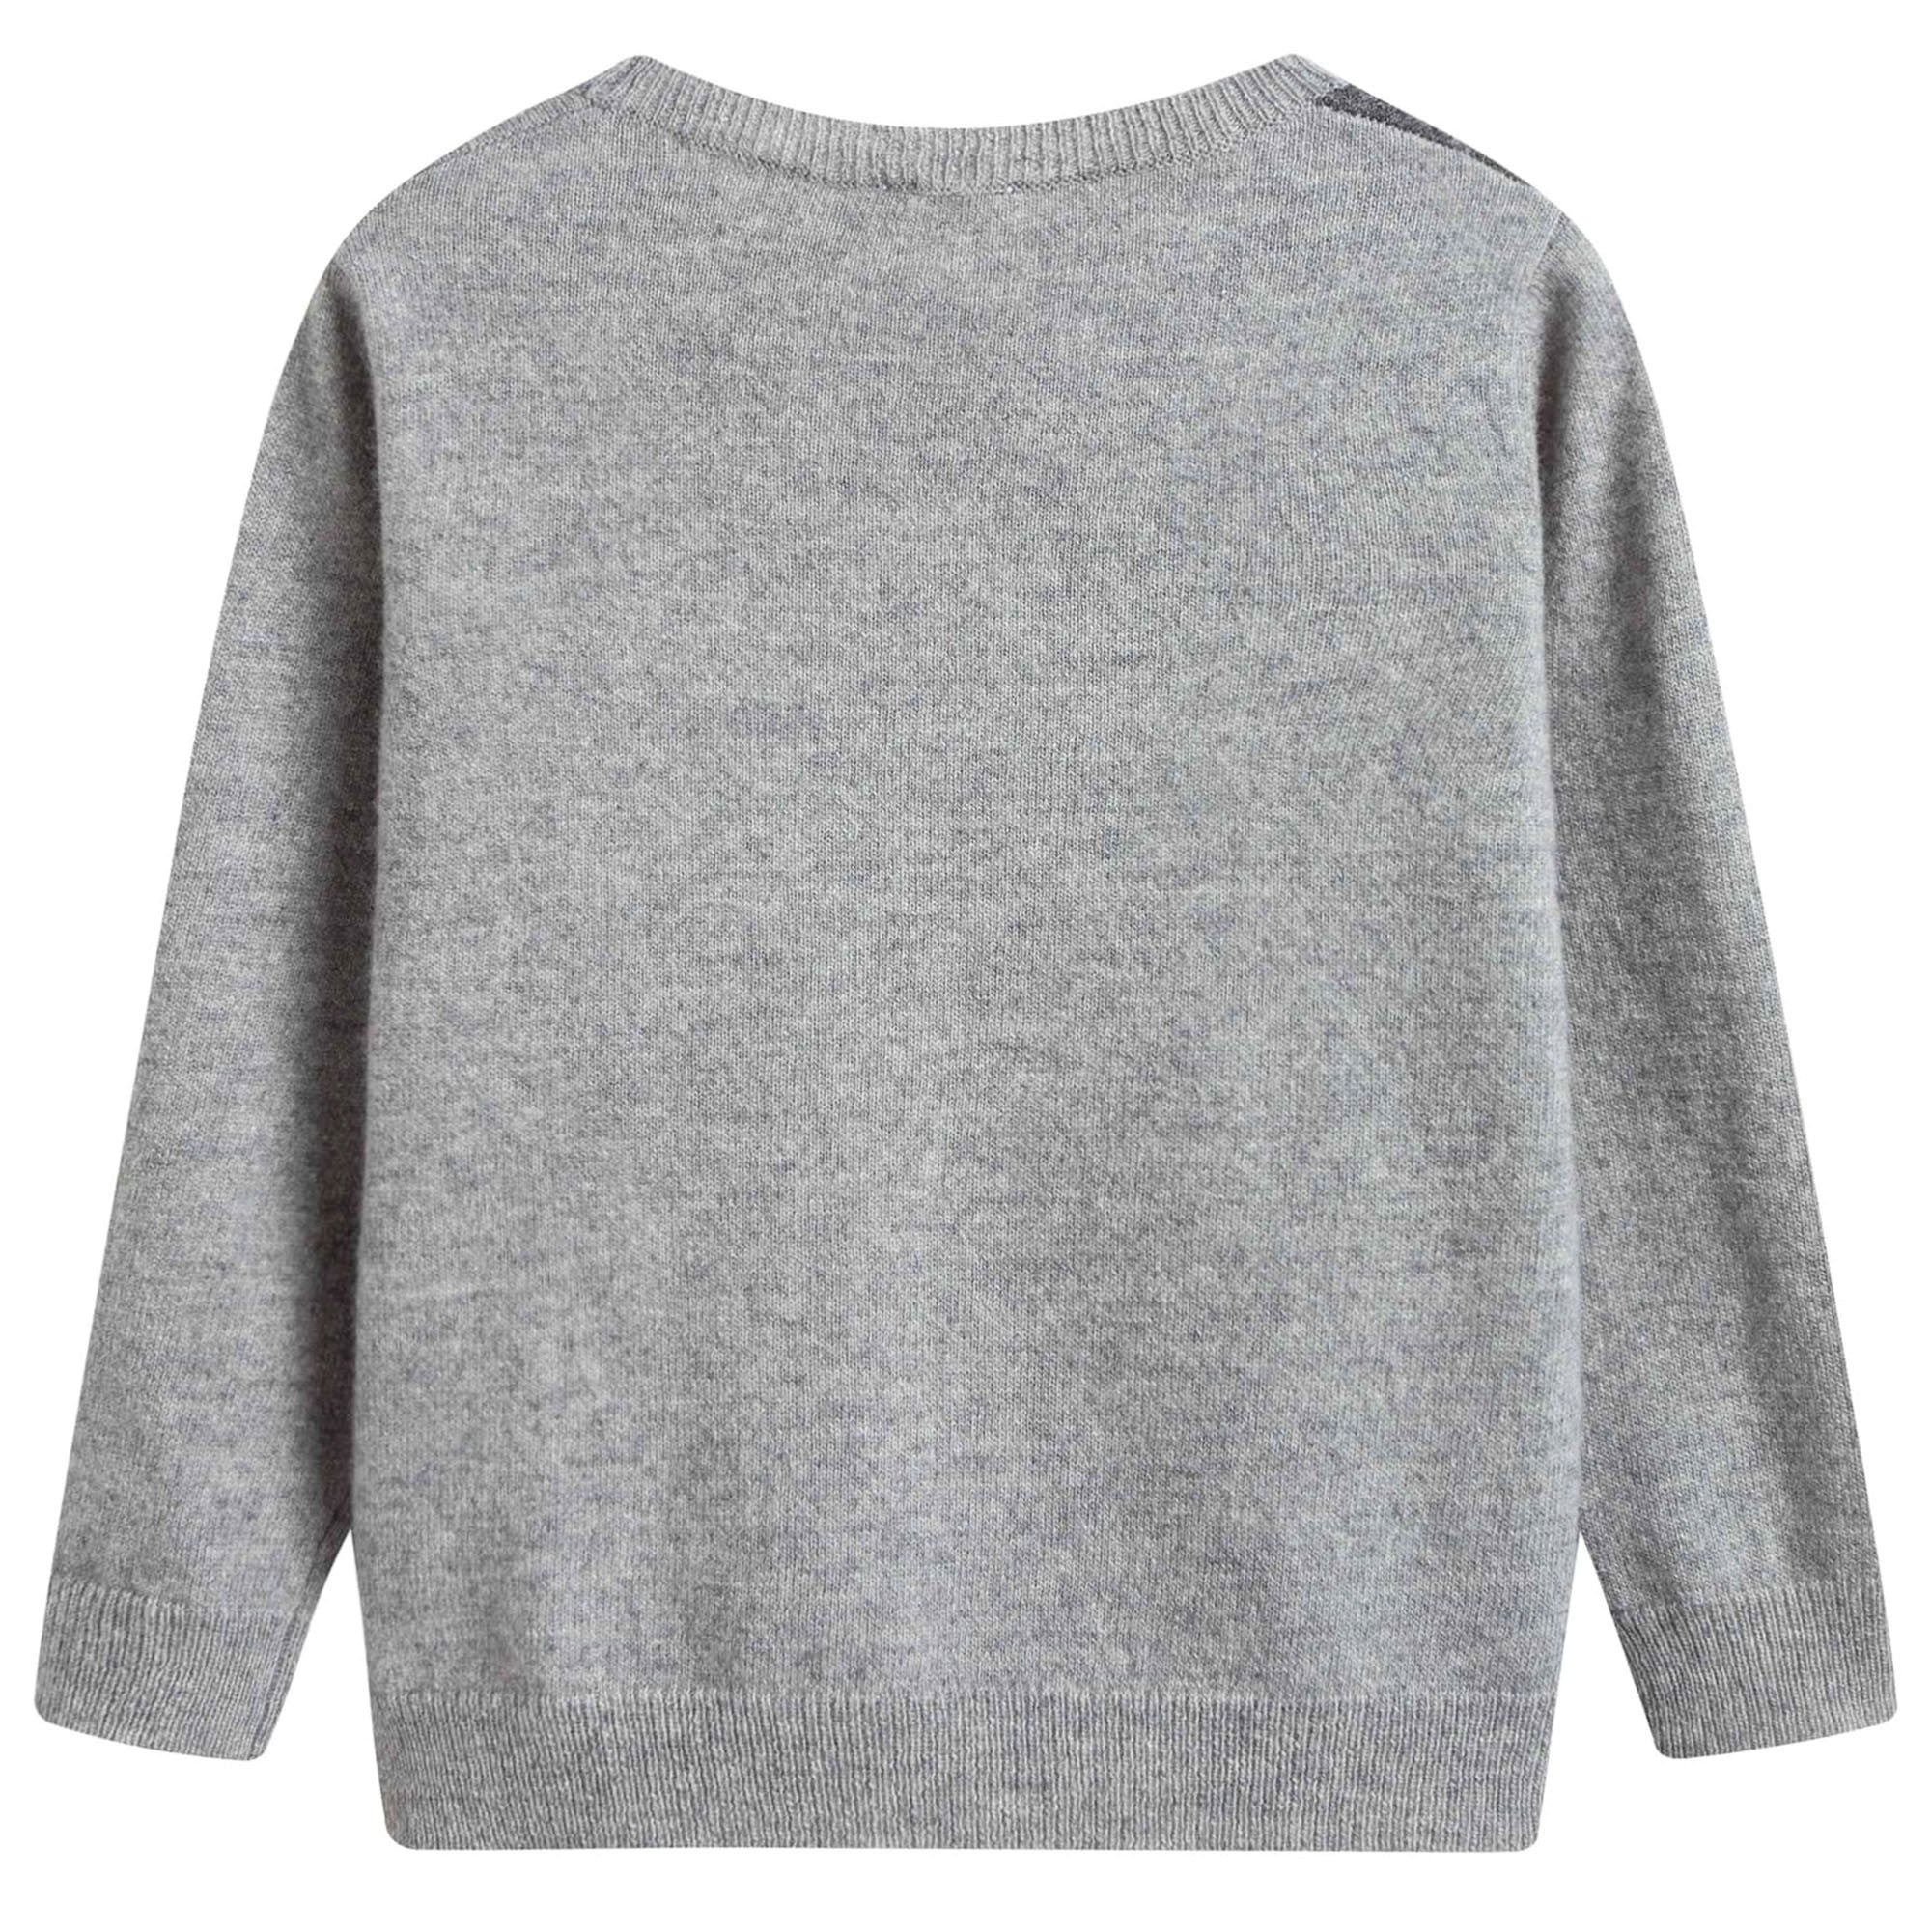 Boys Grey Colour Block Sweater